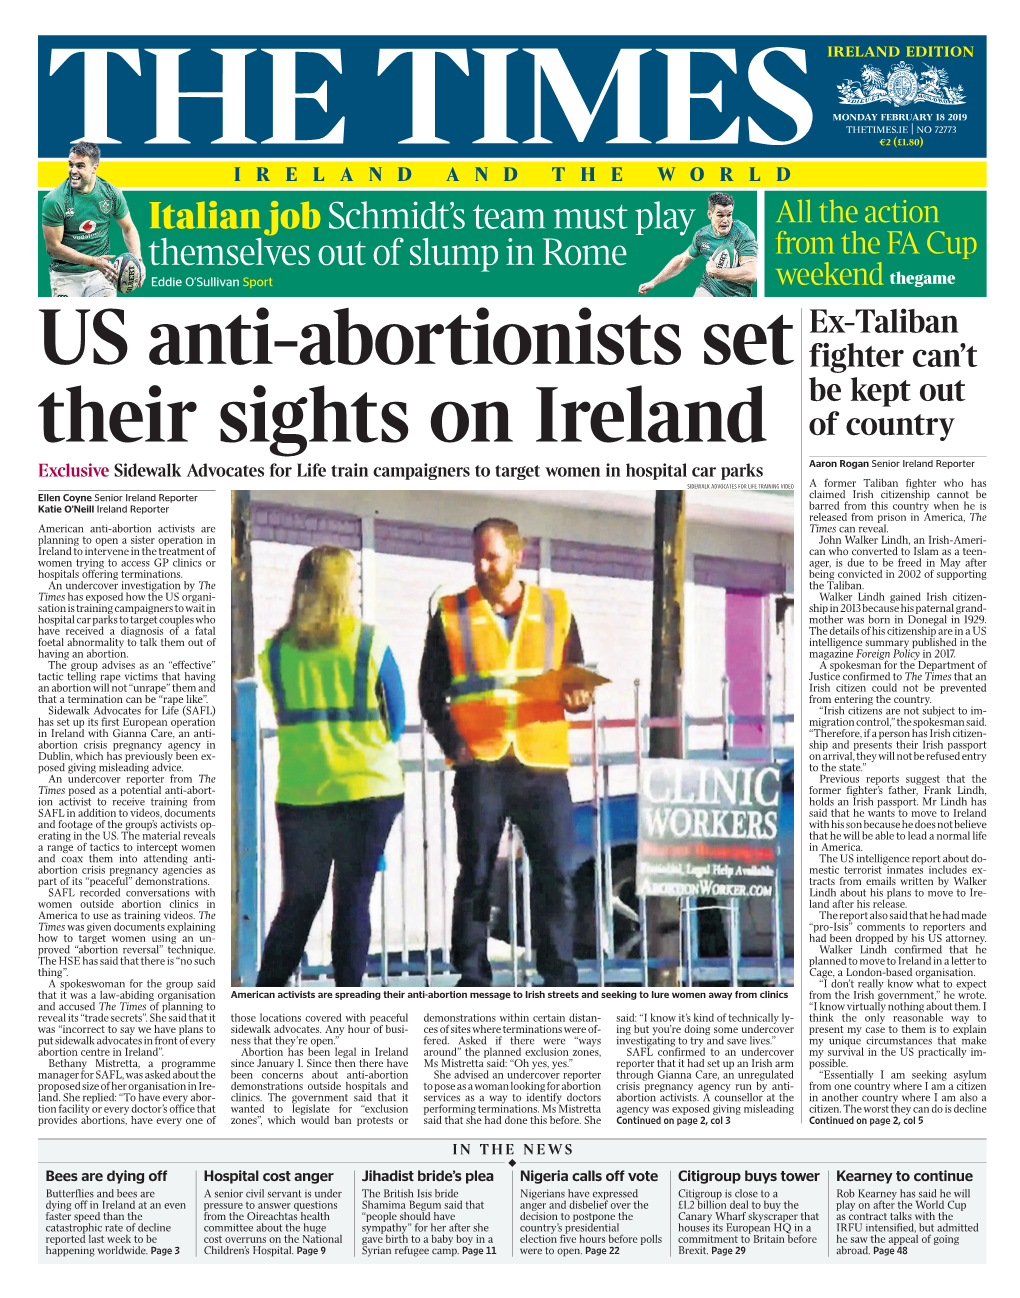 US Anti-Abortionists Set Their Sights on Ireland